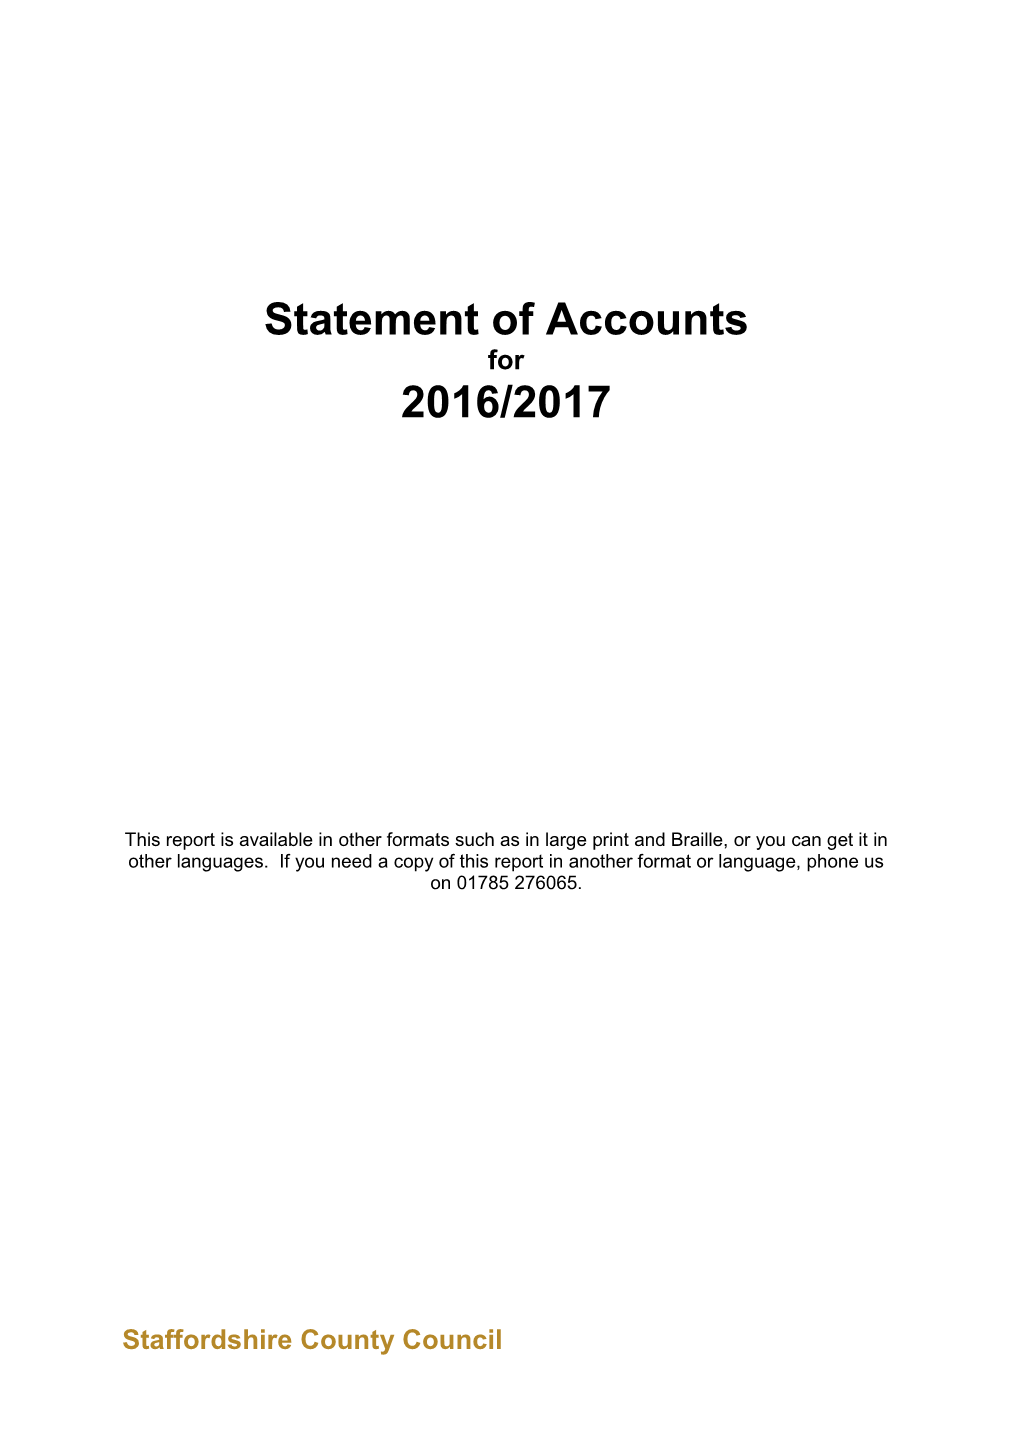 Statement of Accounts 2016/2017